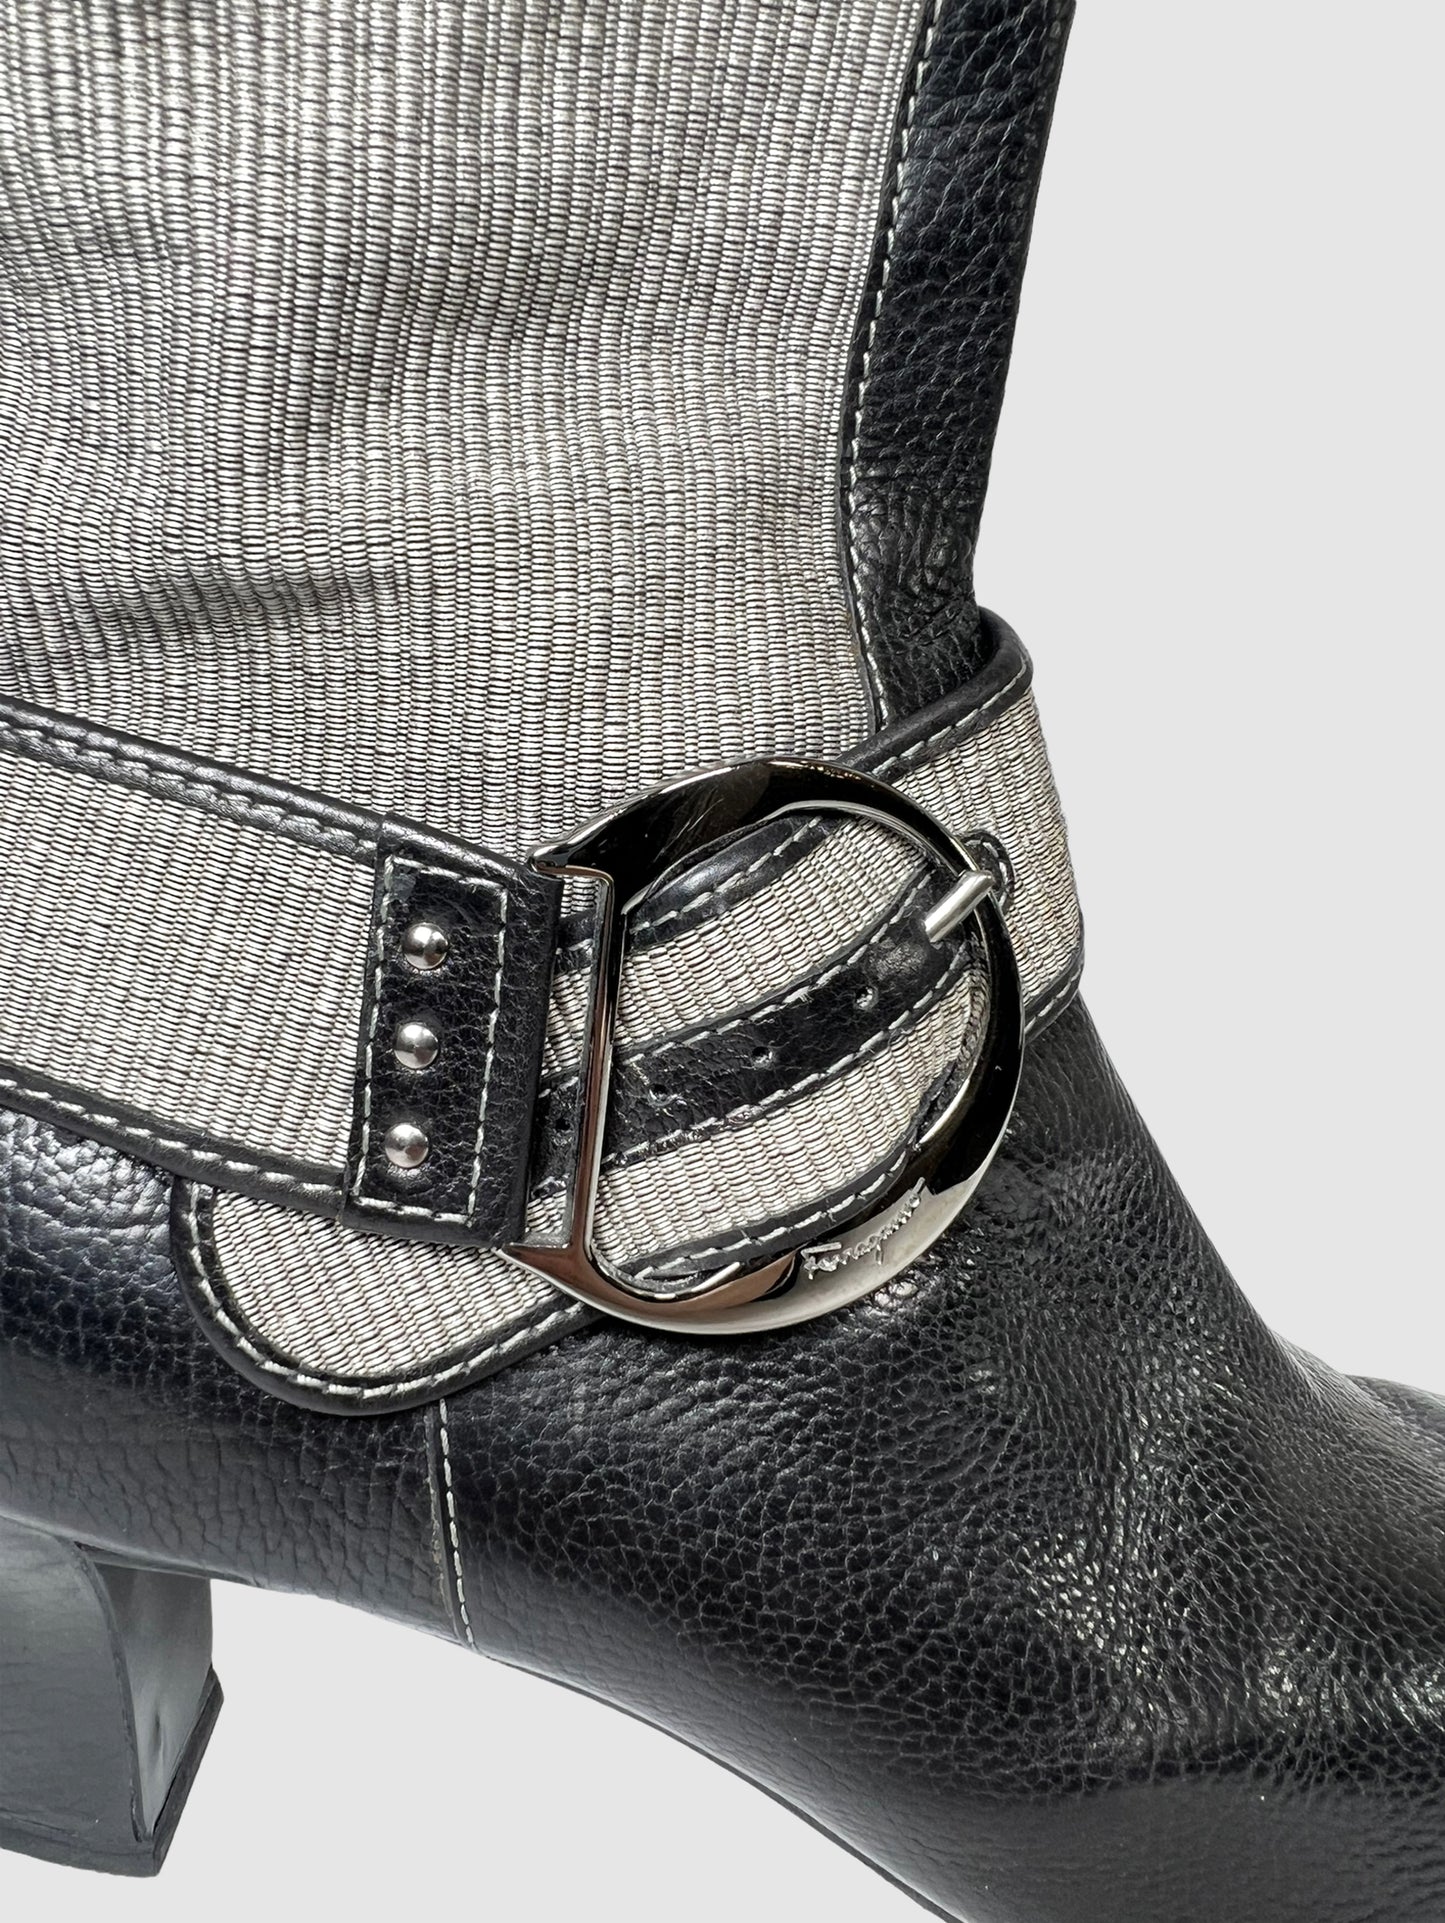 Salvatore Ferragamo Leather Knee-High Boots - Size 6.5